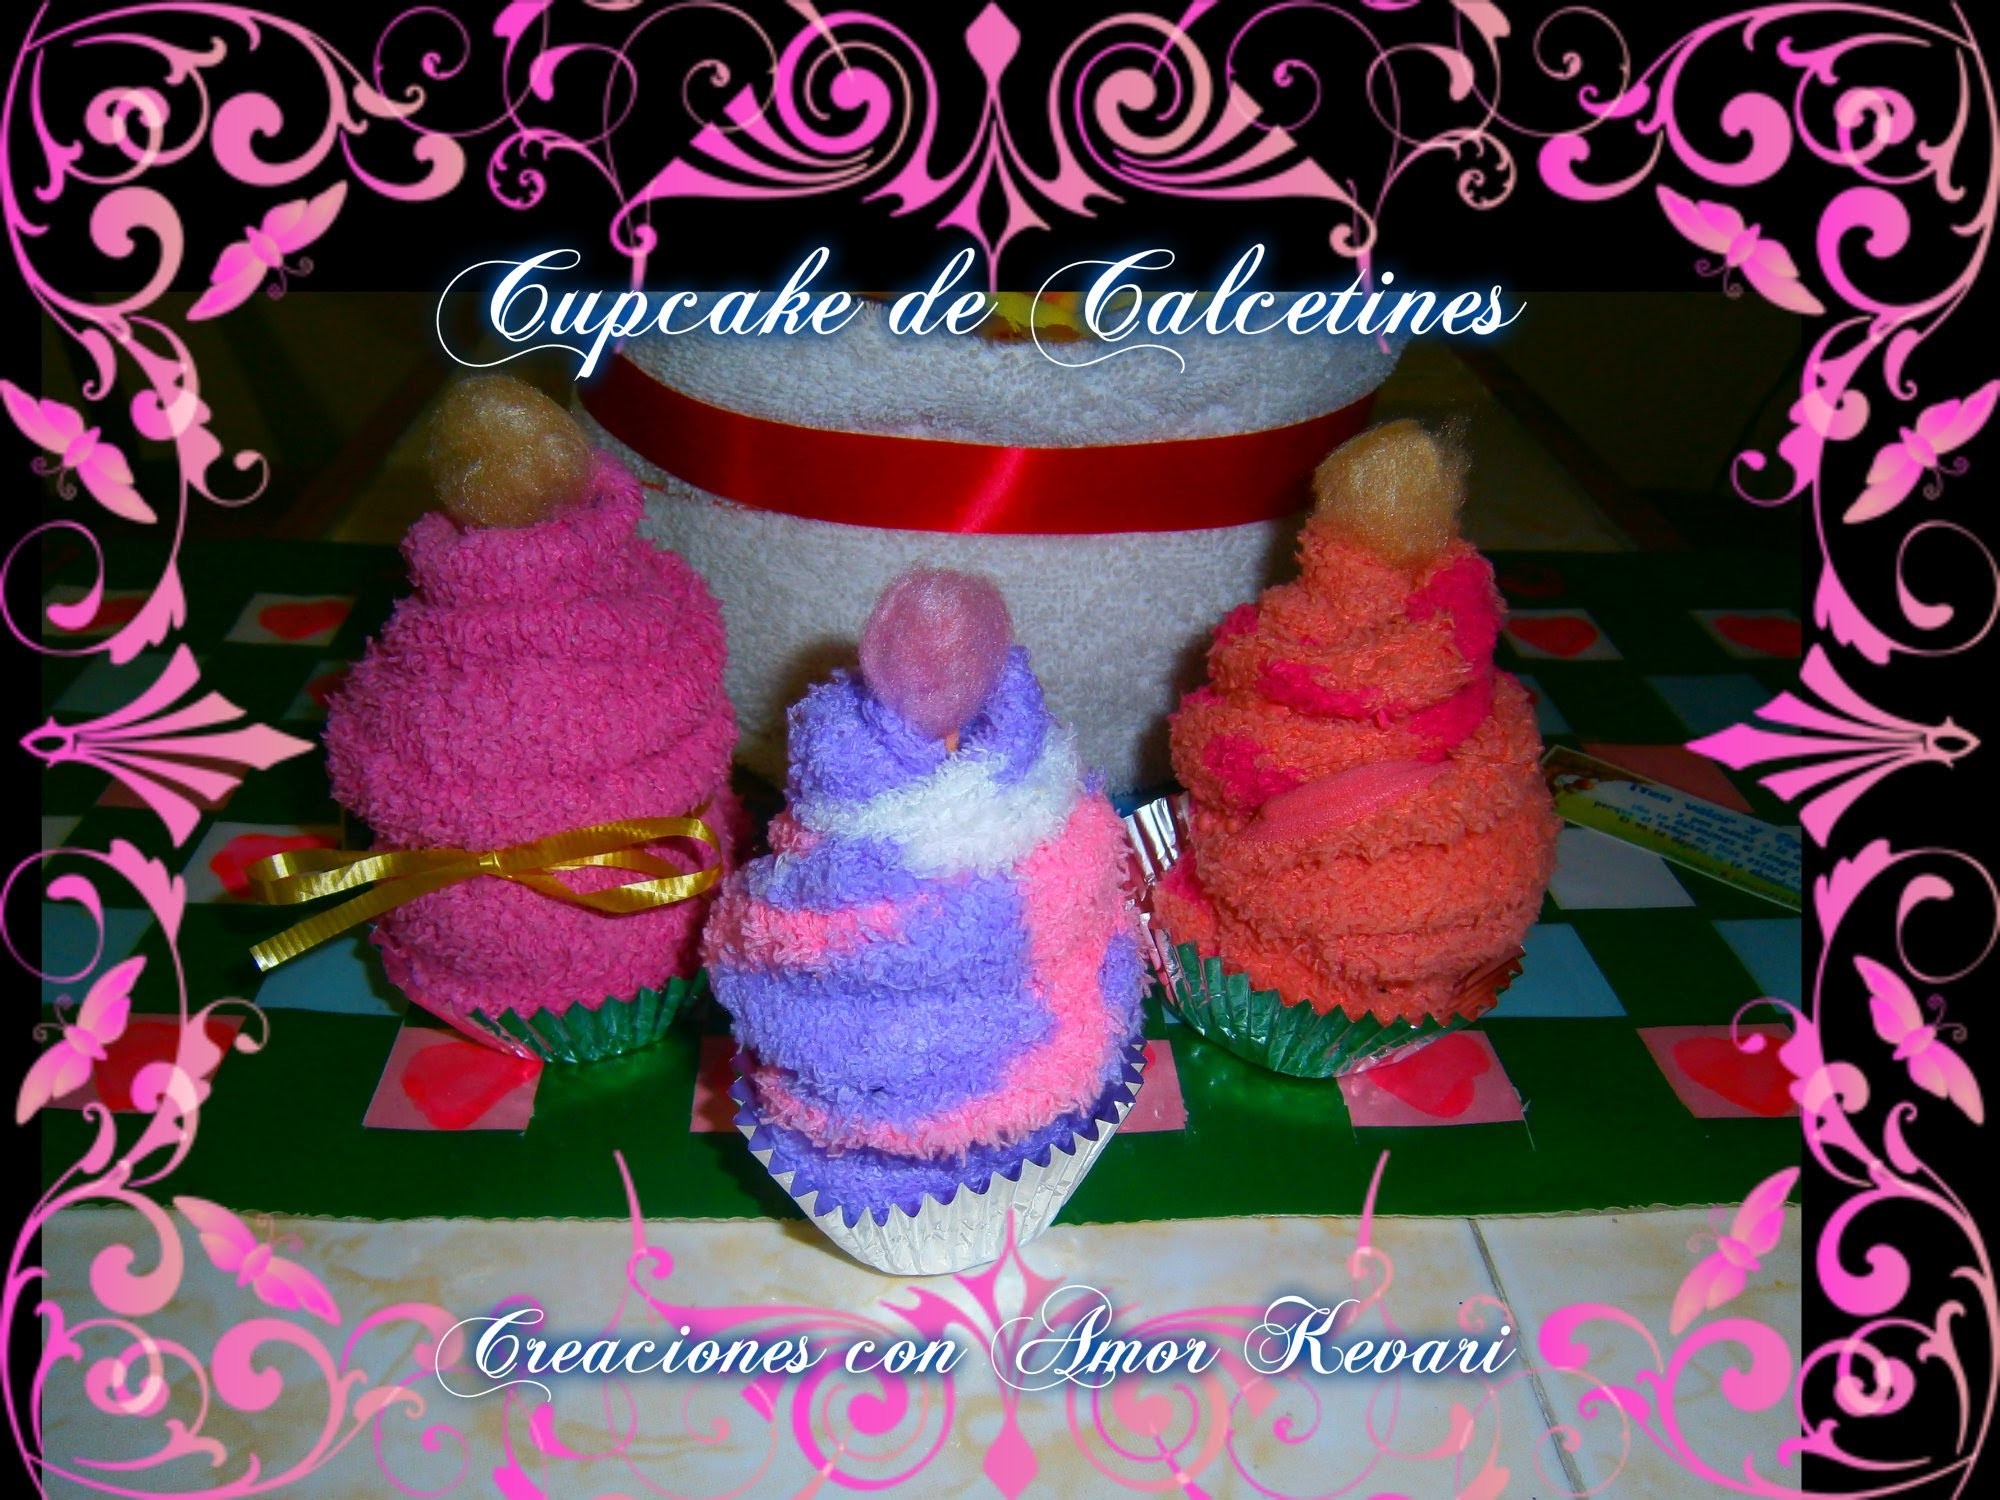 Como Hacer Cupcake de Calcetines｡・:*:・ﾟ☆.How to Make a Socks Cupcakes